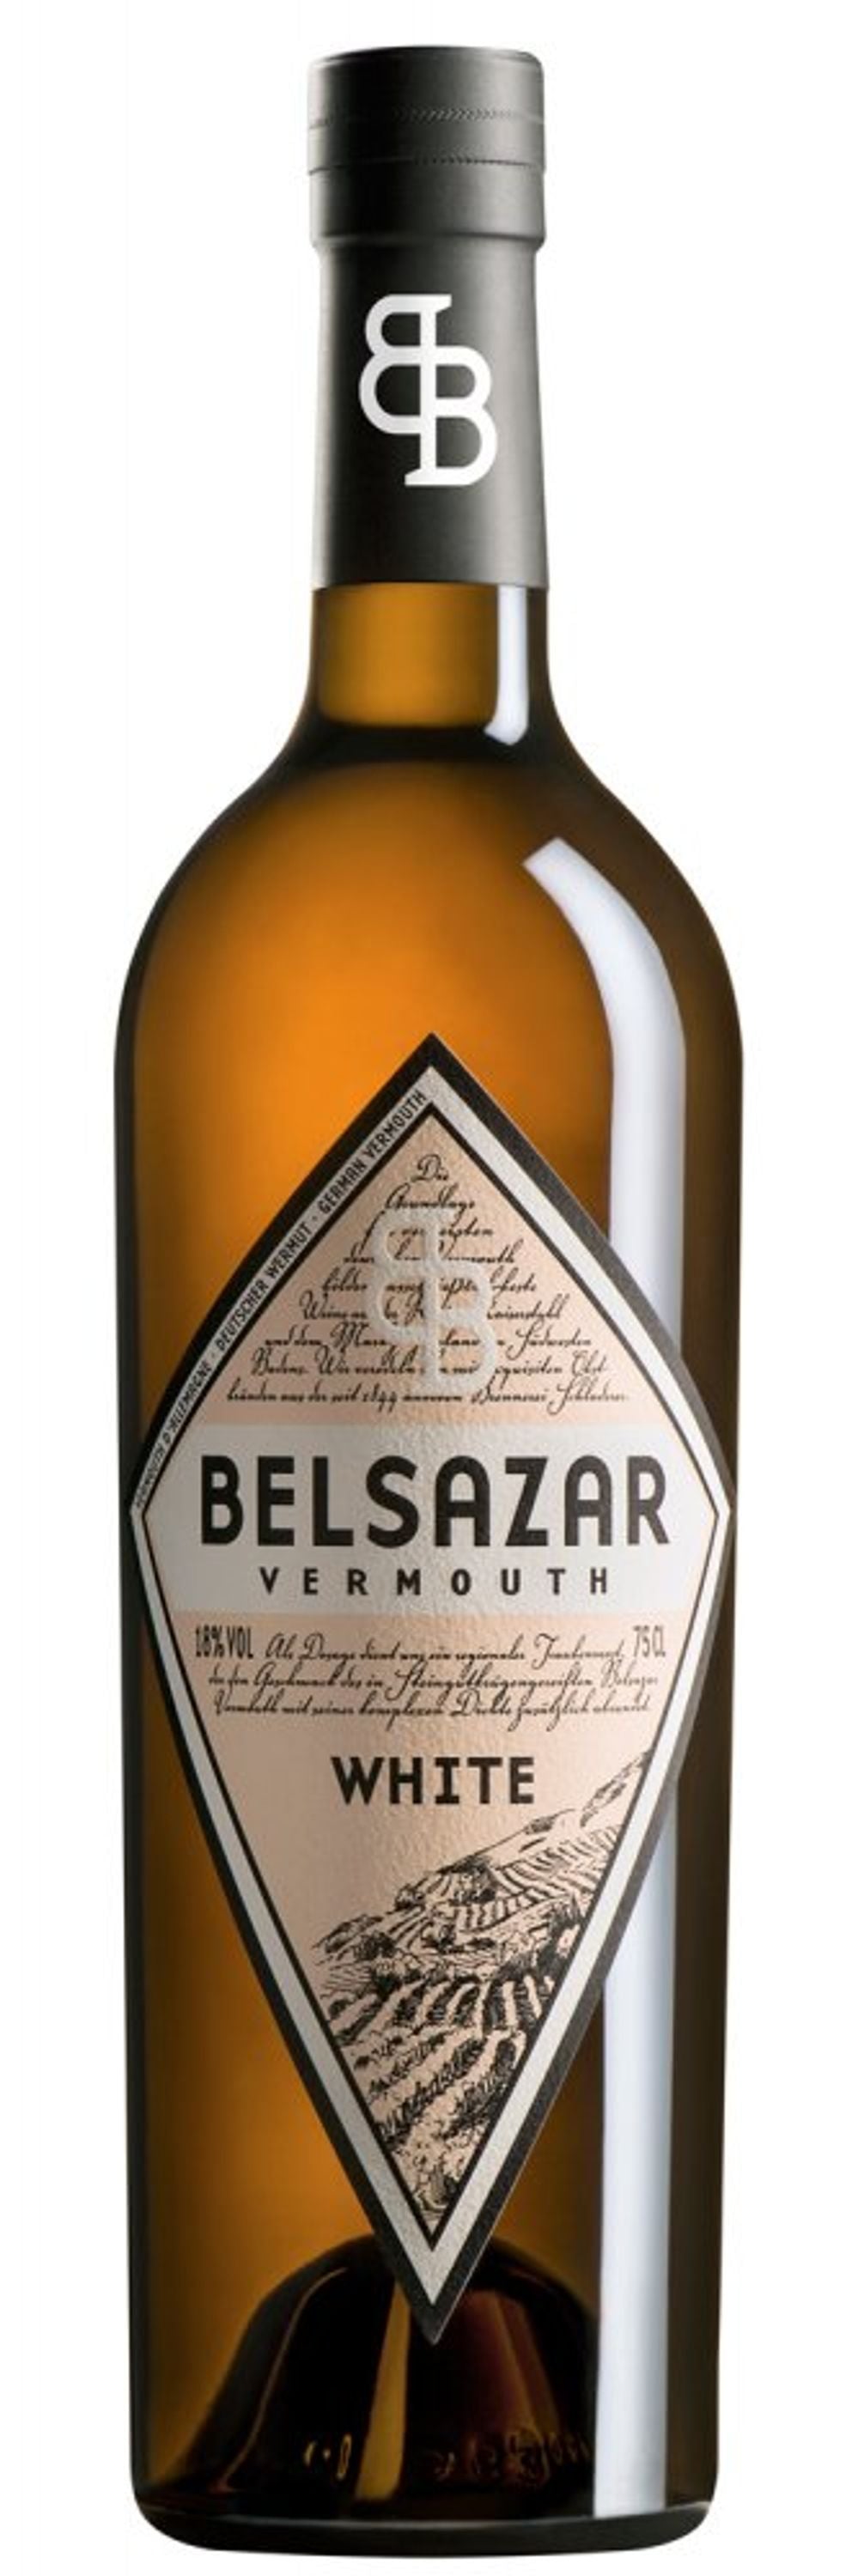 Belsazar Vermouth White 0,7l, alk. 18 tilavuusprosenttia, vermutti Saksa